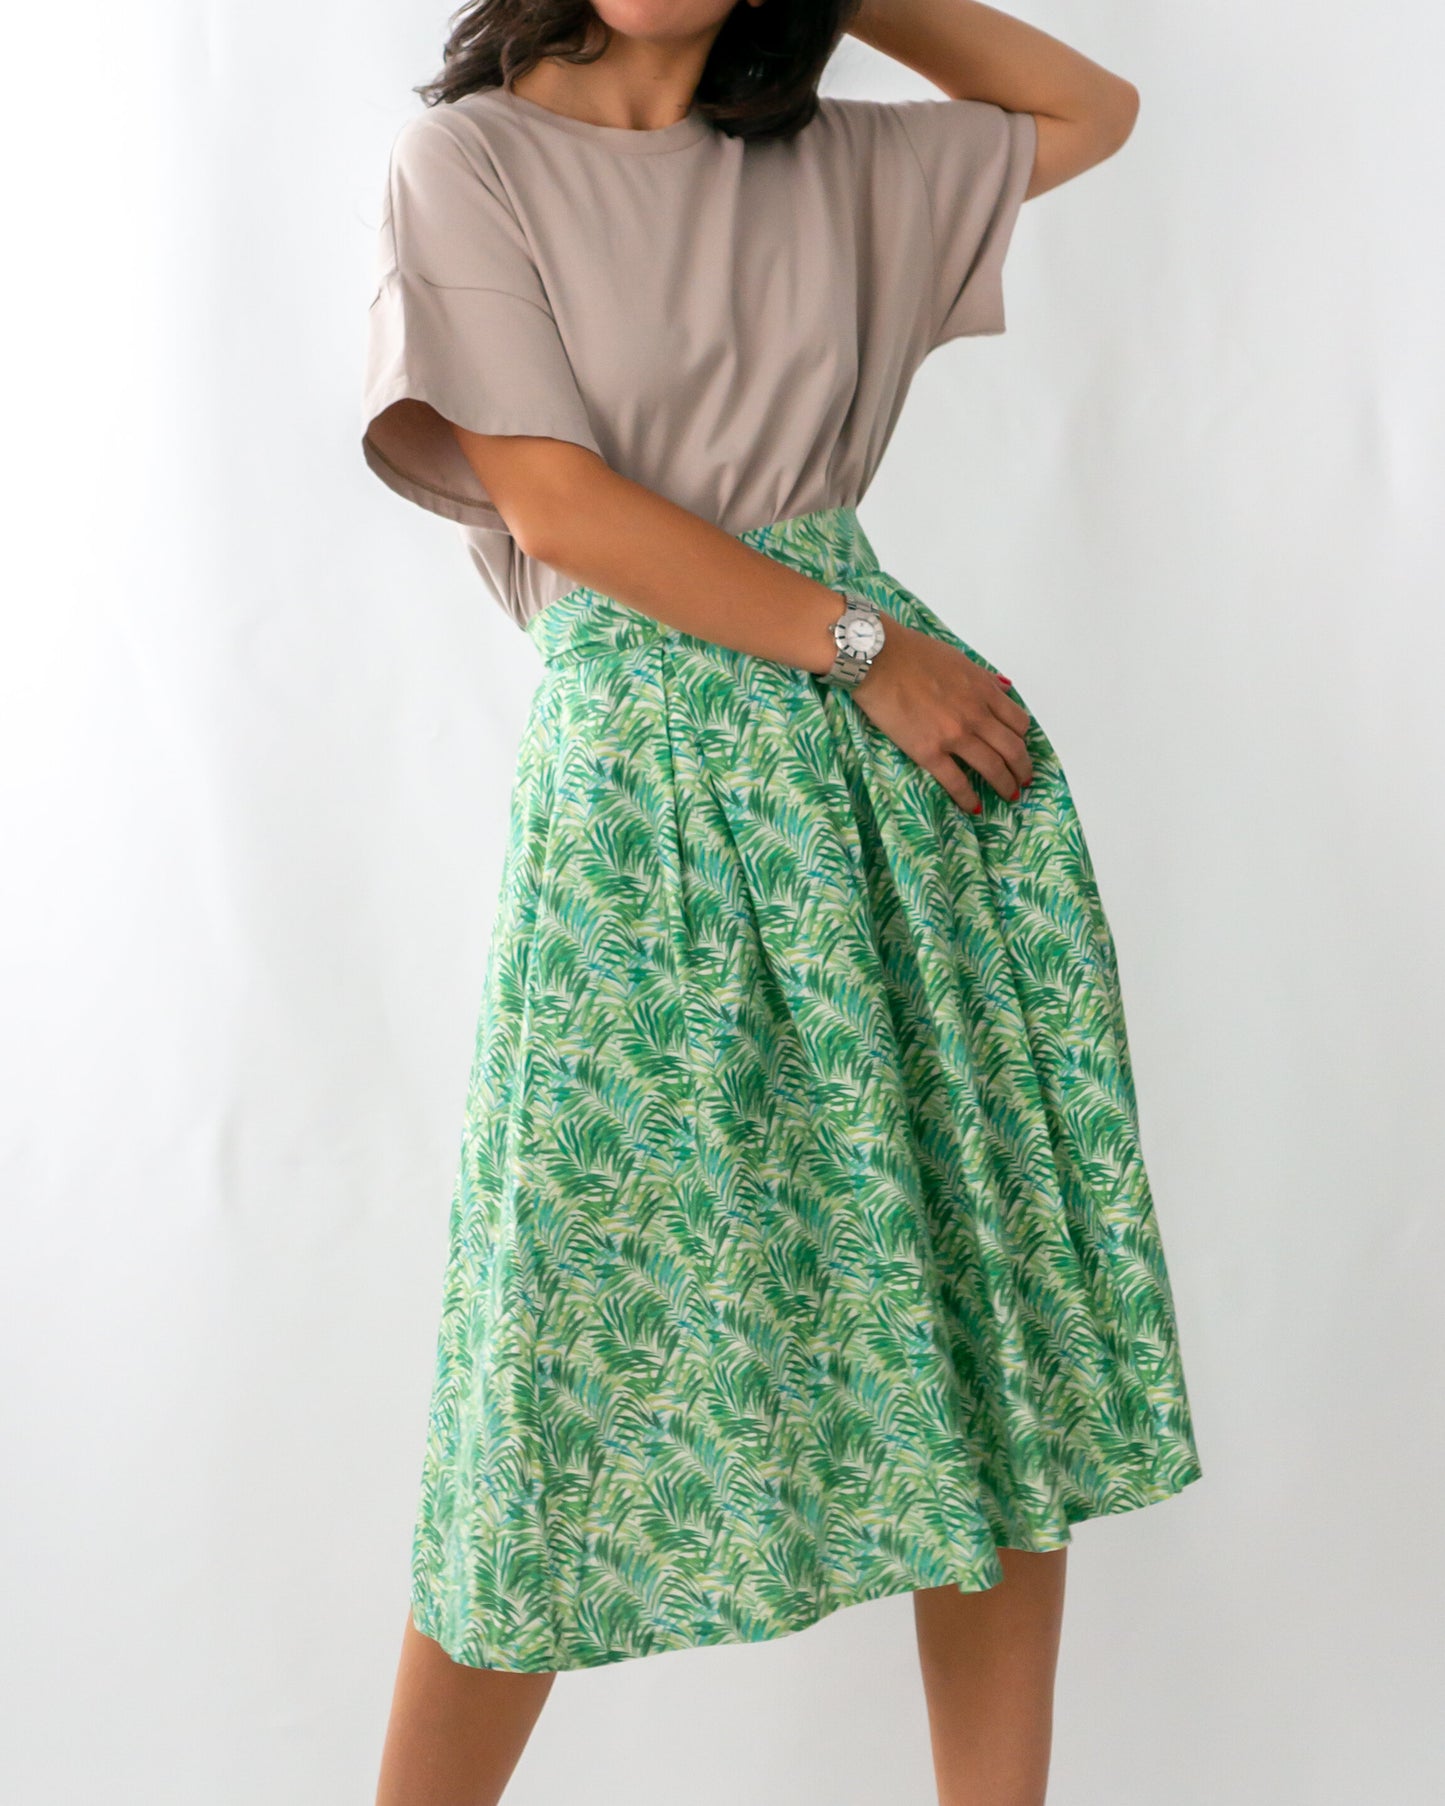 Stephanie Skirt -  PDF Sewing Pattern